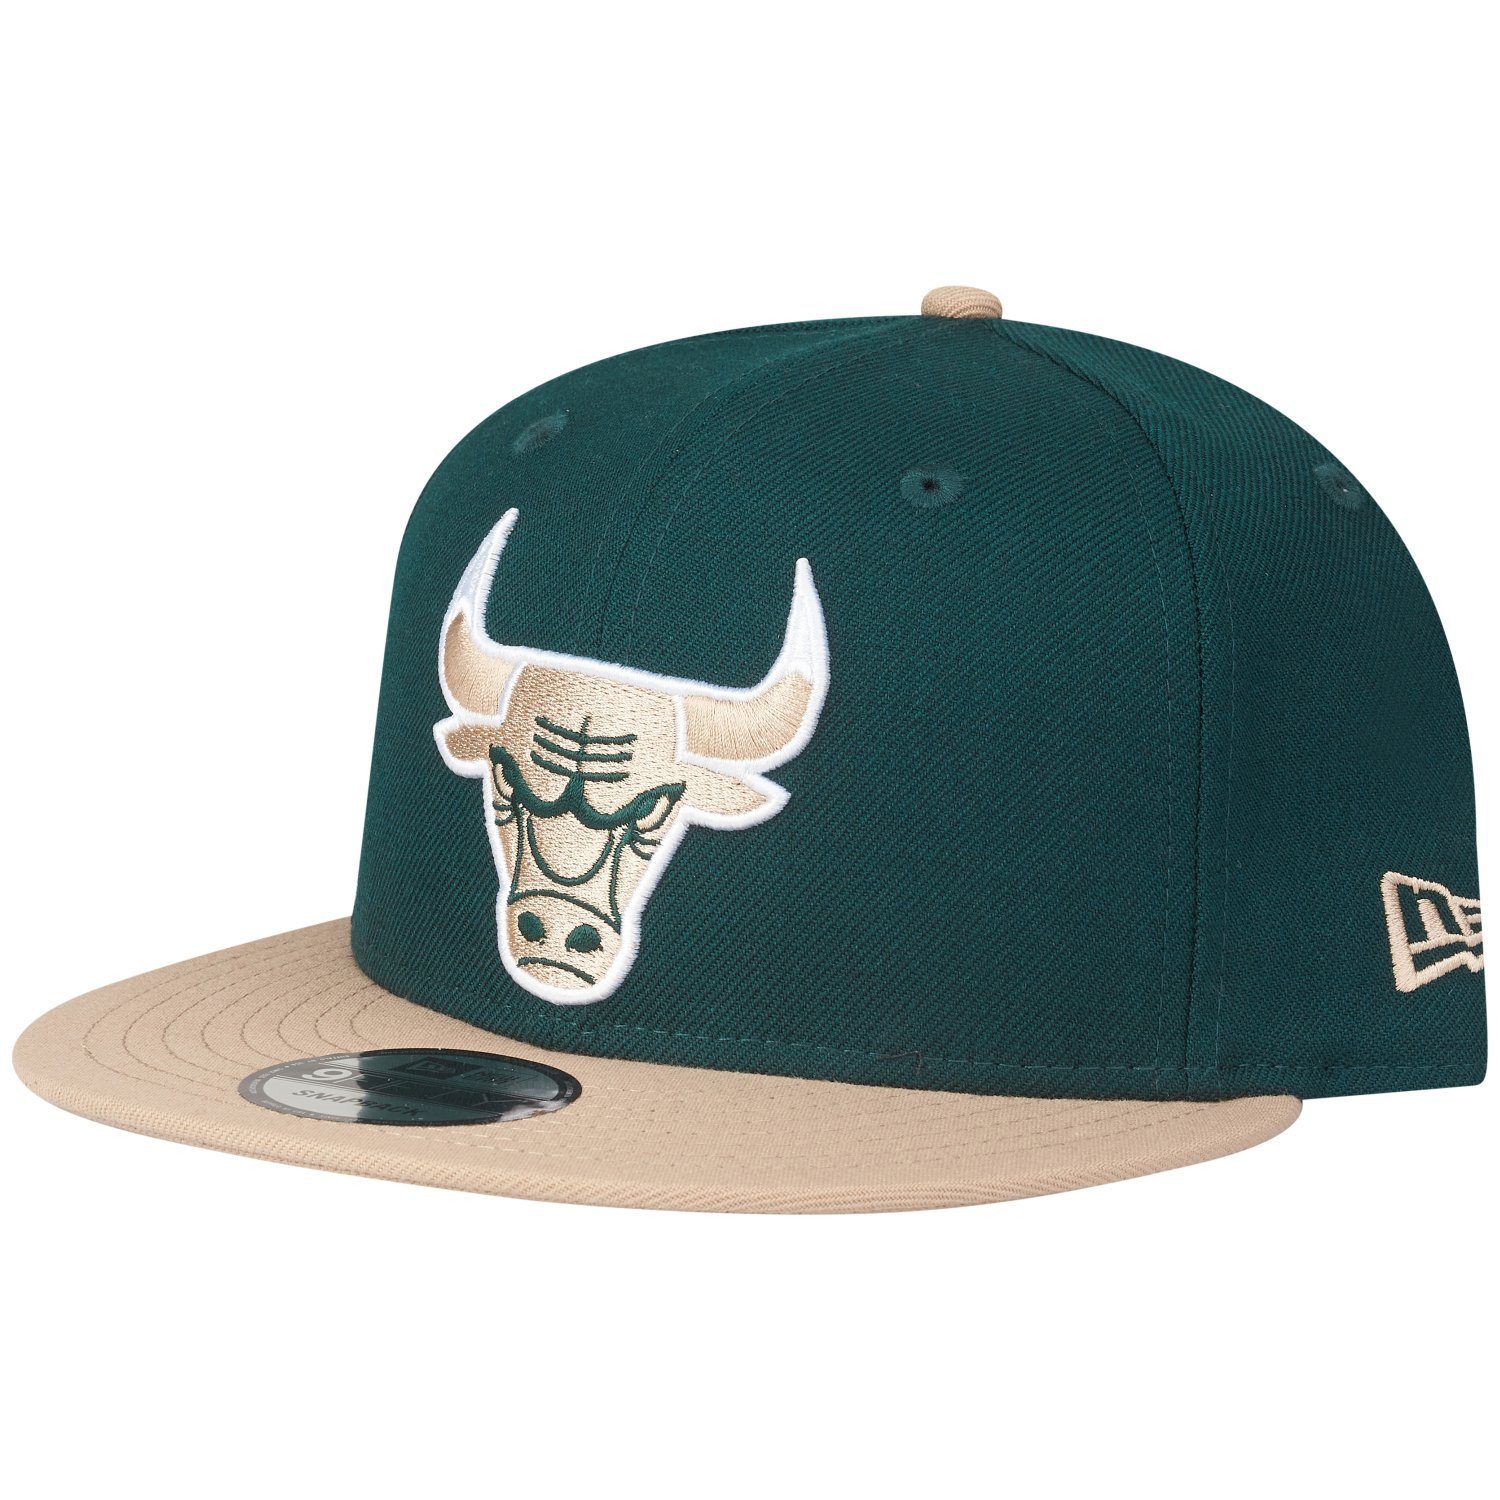 New 9Fifty Snapback Bulls Cap green Chicago Era